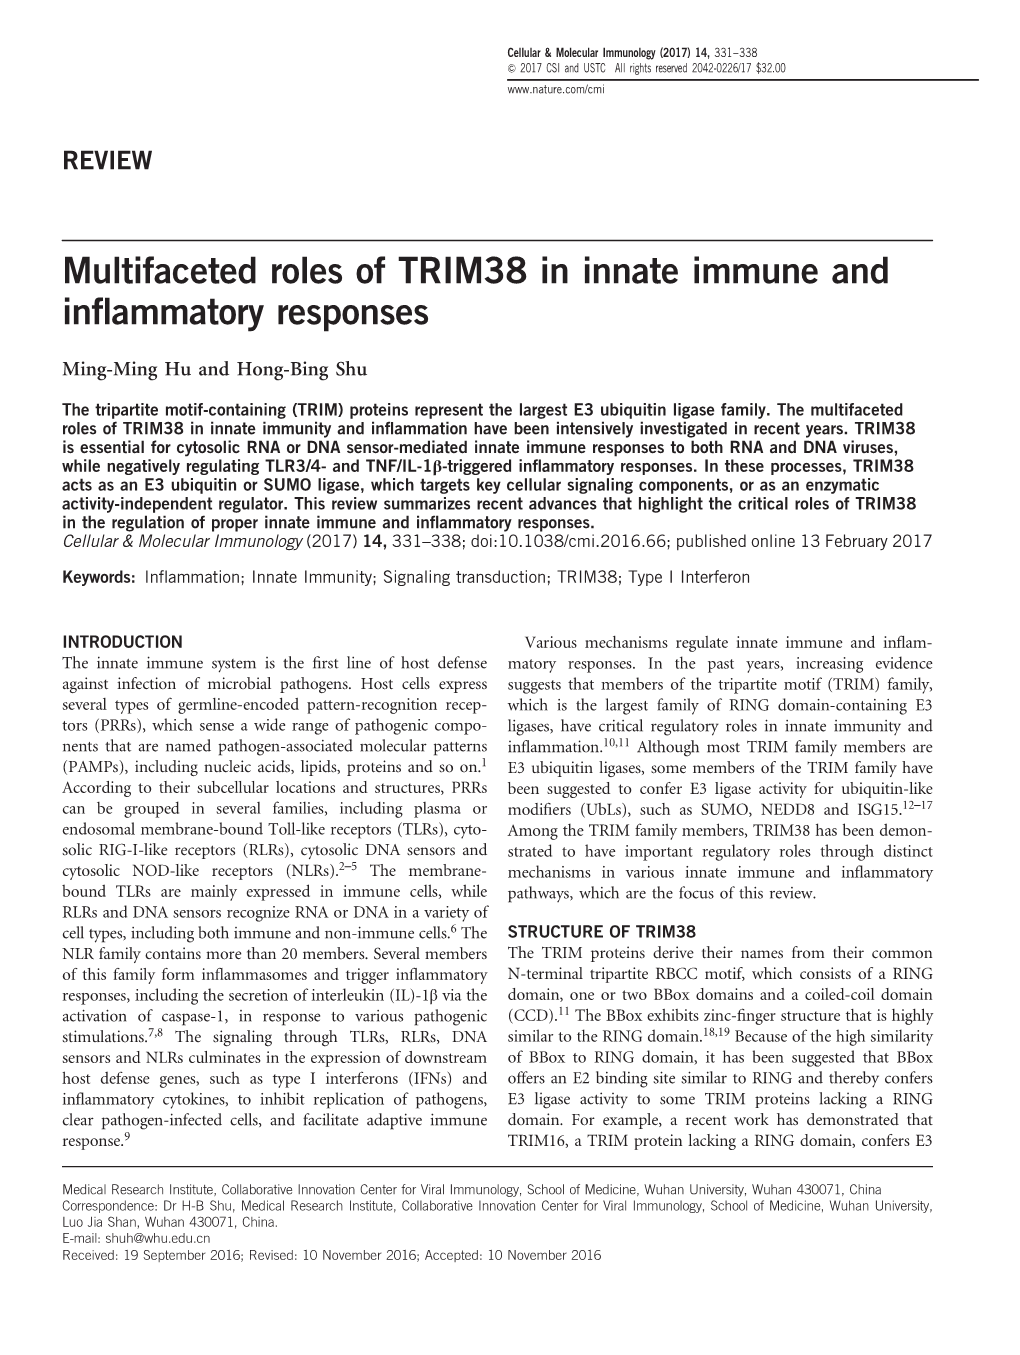 Multifaceted Roles of TRIM38 in Innate Immune and Inflammatory Responses